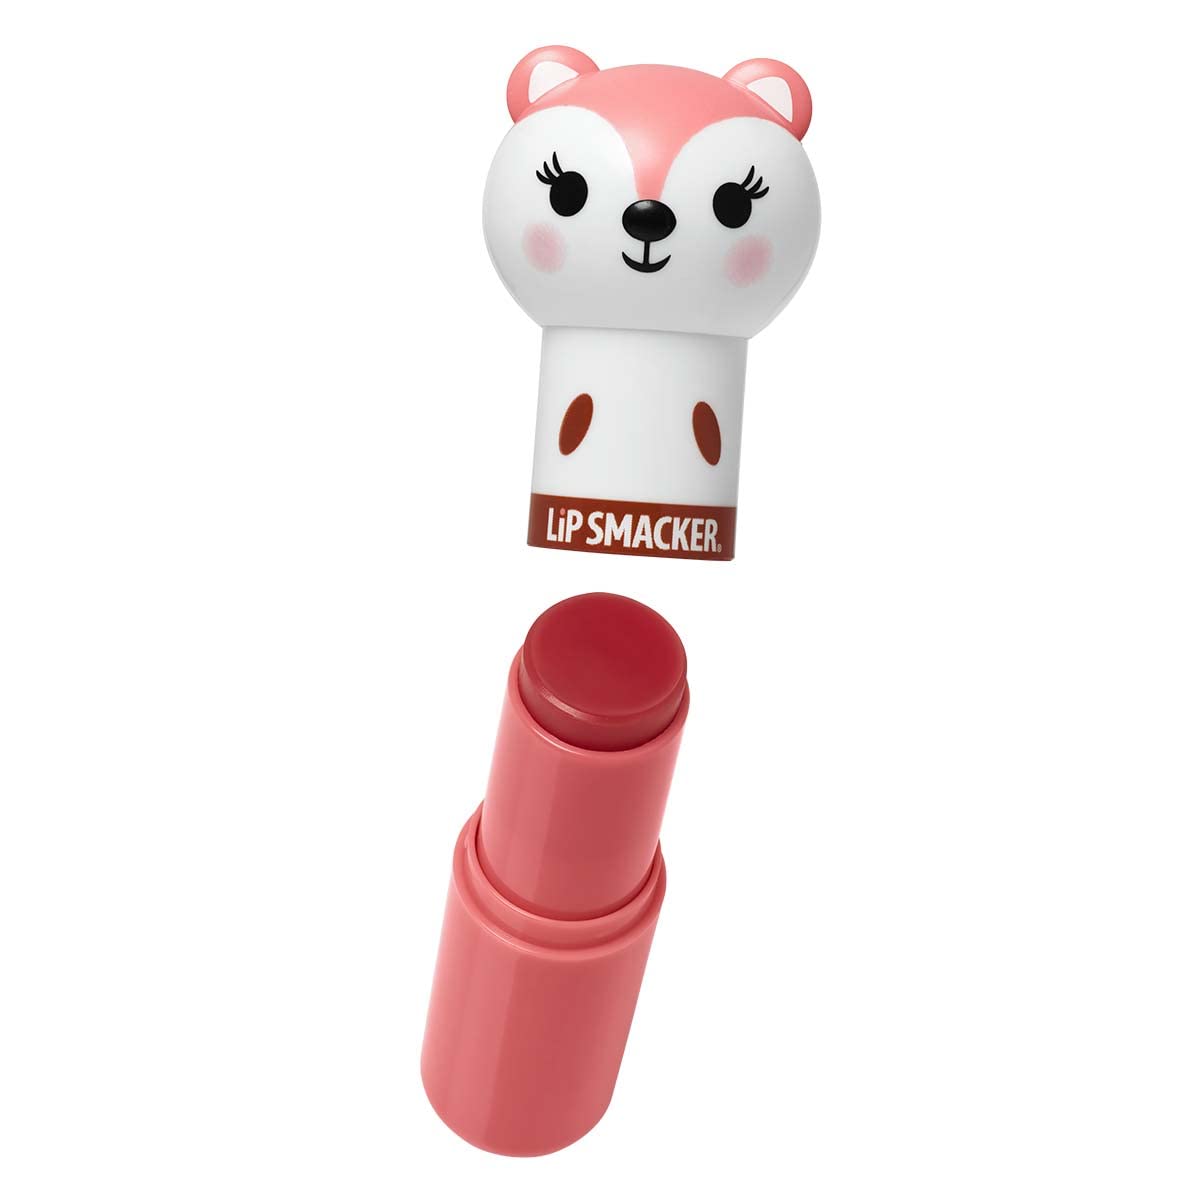 Lip Smacker Lippy Pals Fox, Flavored Moisturizing & Smoothing Soft Shine Lip Balm, Hydrating & Protecting Fun Tasty Flavors, Cruelty-Free & Vegan - Foxy Apple : Beauty & Personal Care